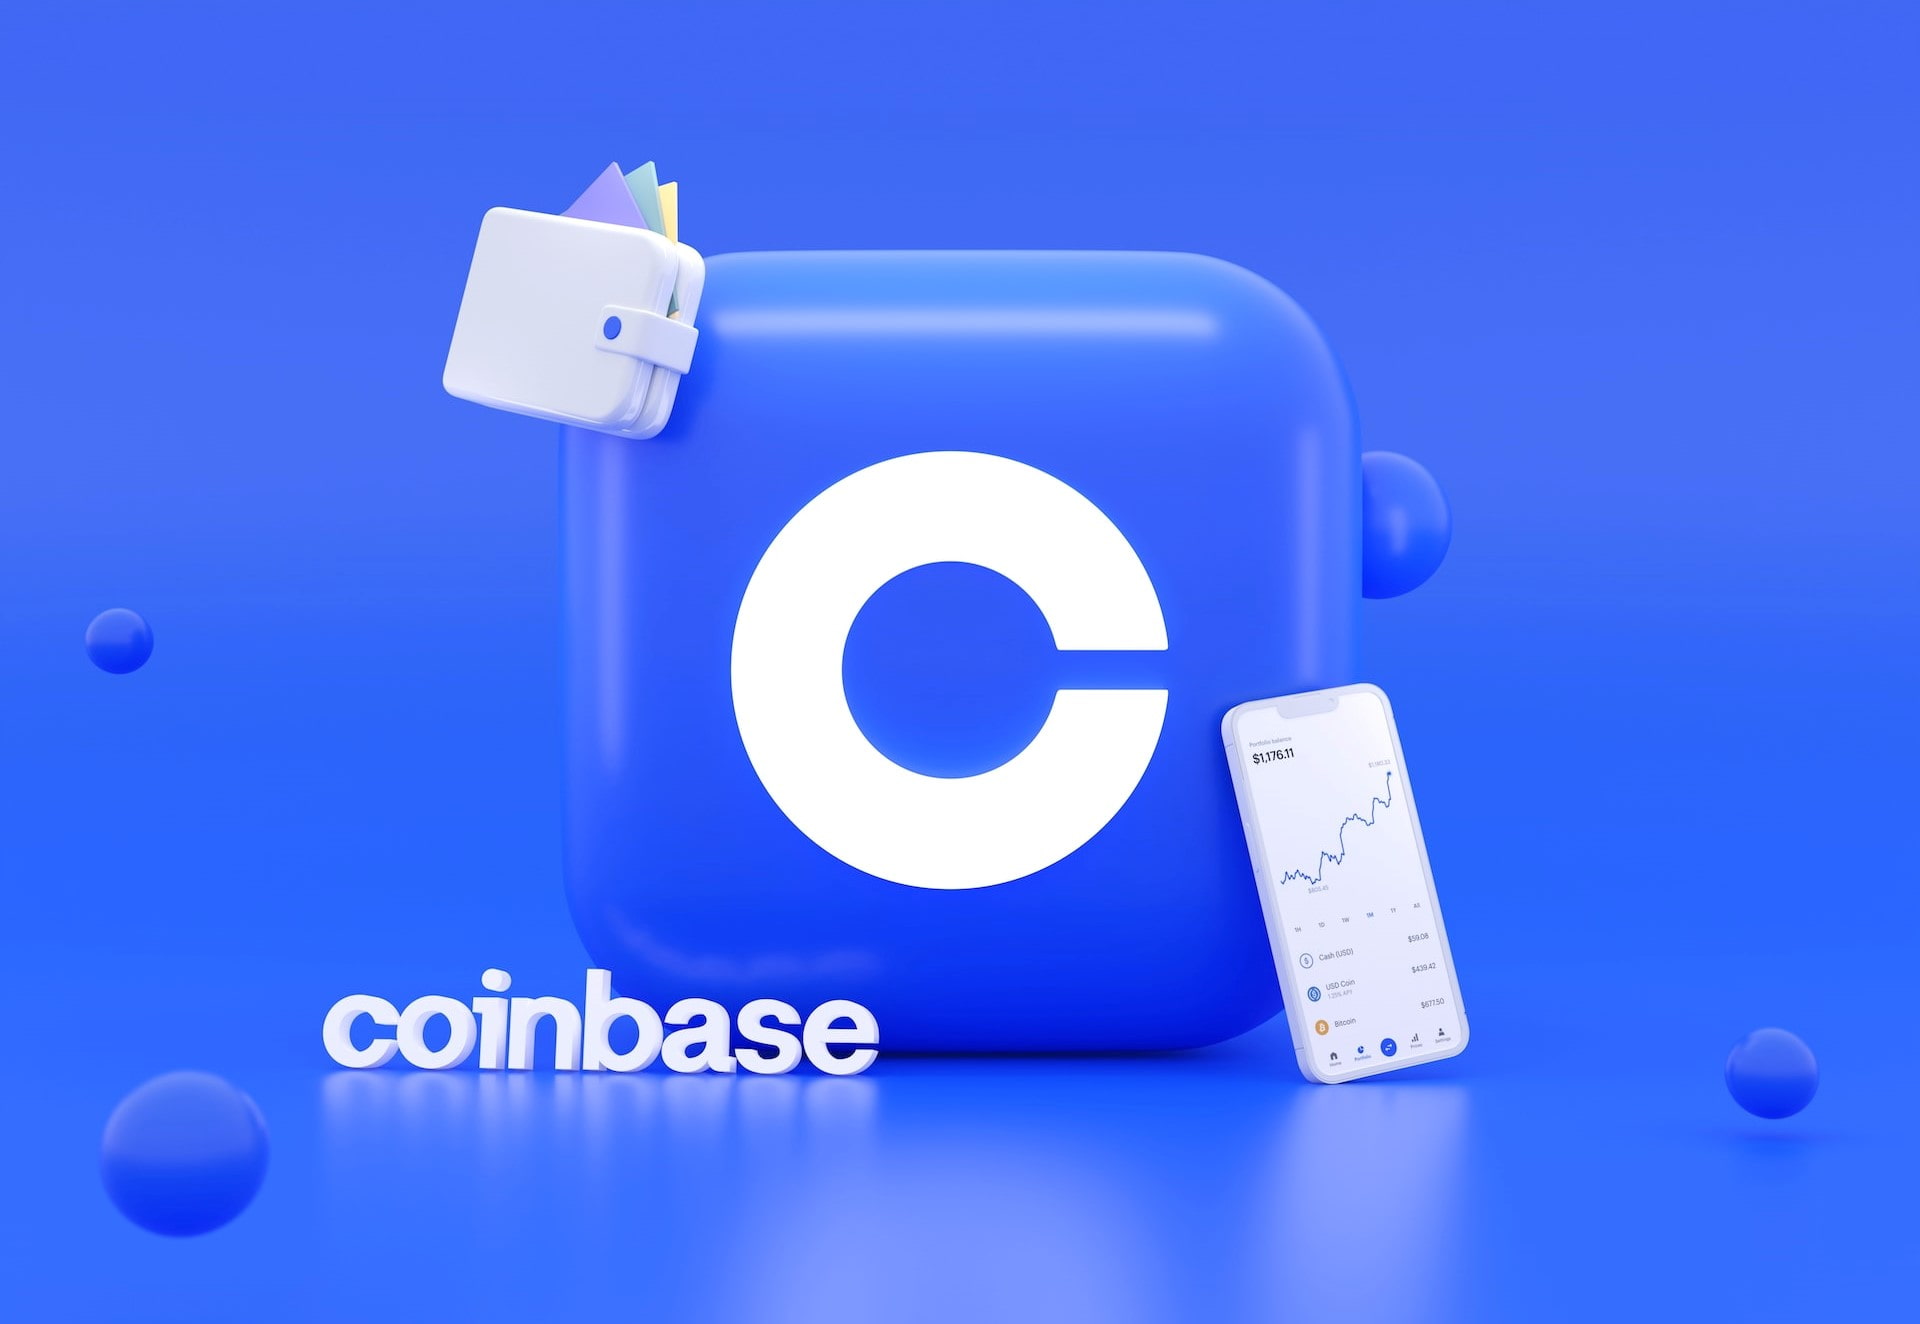 Coinbase perdió USD $79 millones en primer trimestre, pero resultados sorprendieron positivamente - DiarioBitcoin